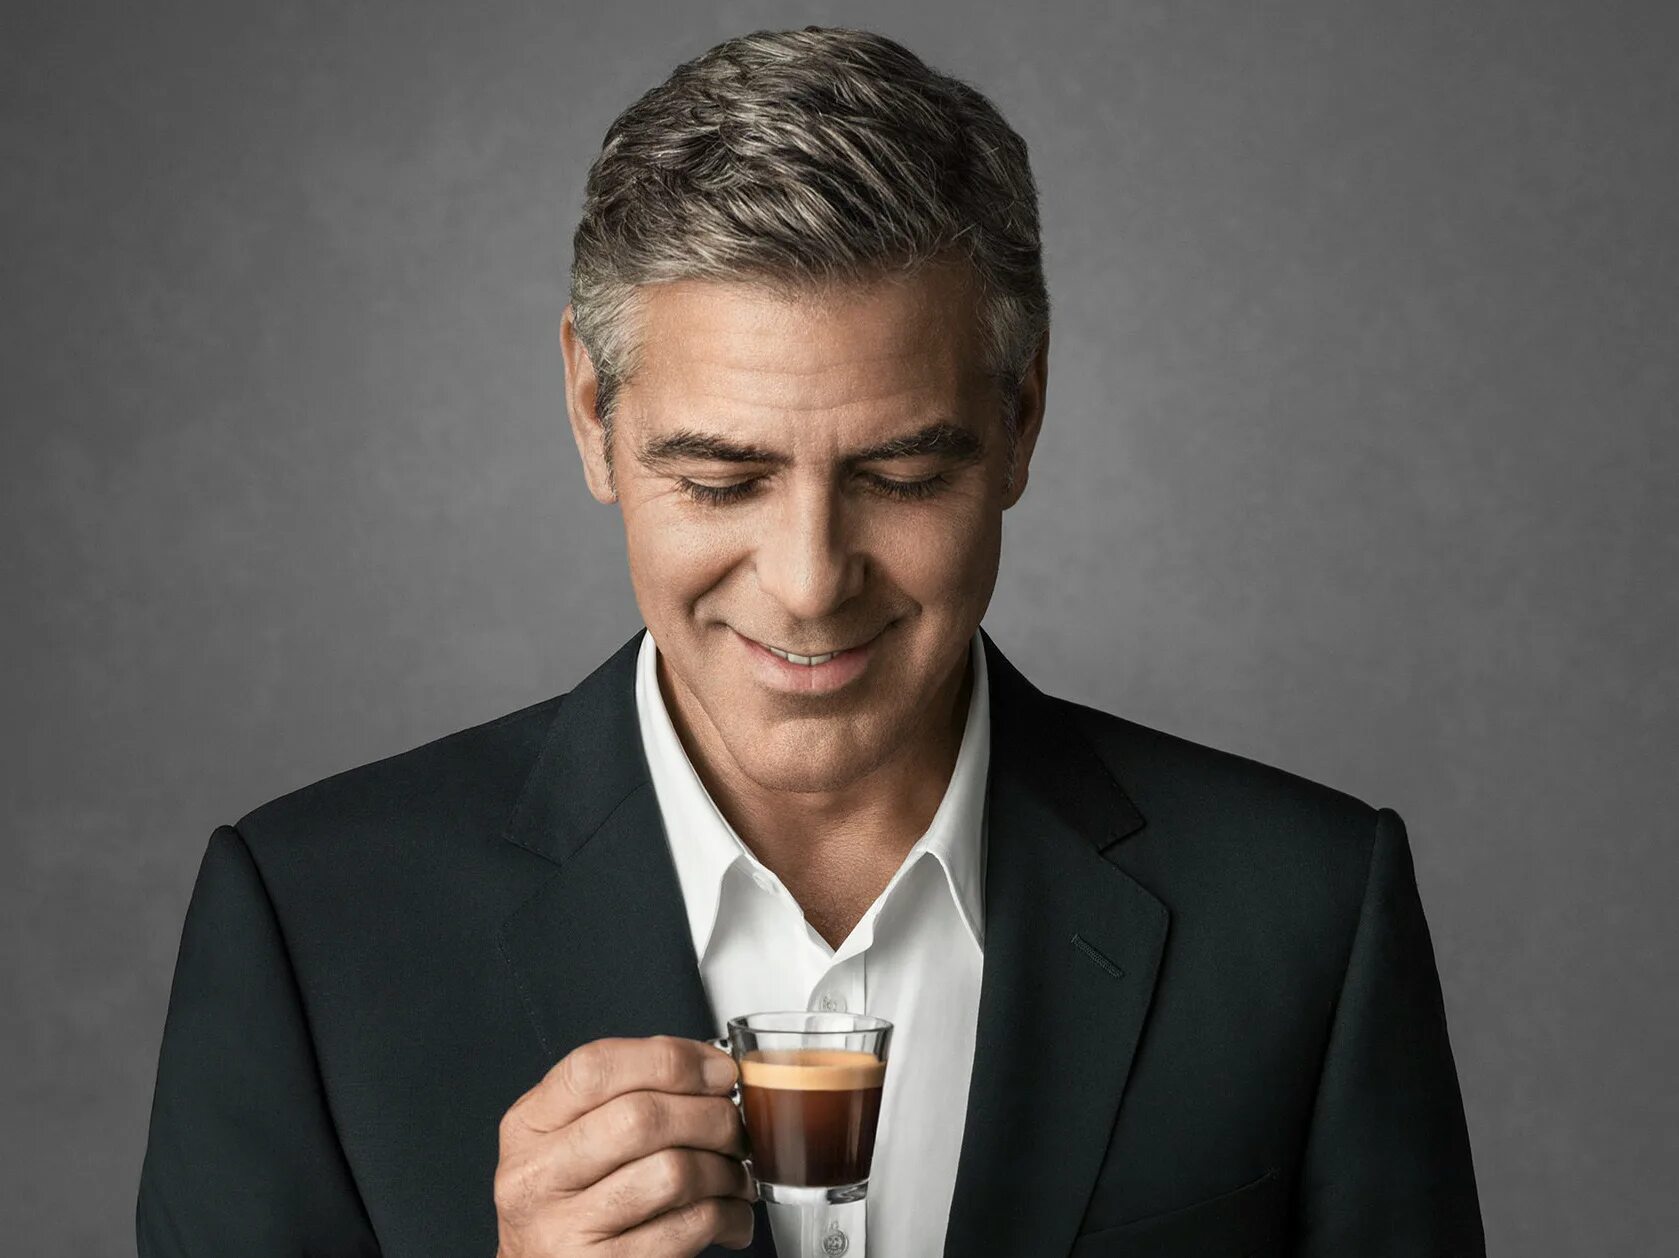 Рекламирует кофе. Джордж Клуни неспрессо. Джордж Клуни кофе. Клуни неспрессо. Nespresso 2006 Джордж Клуни.